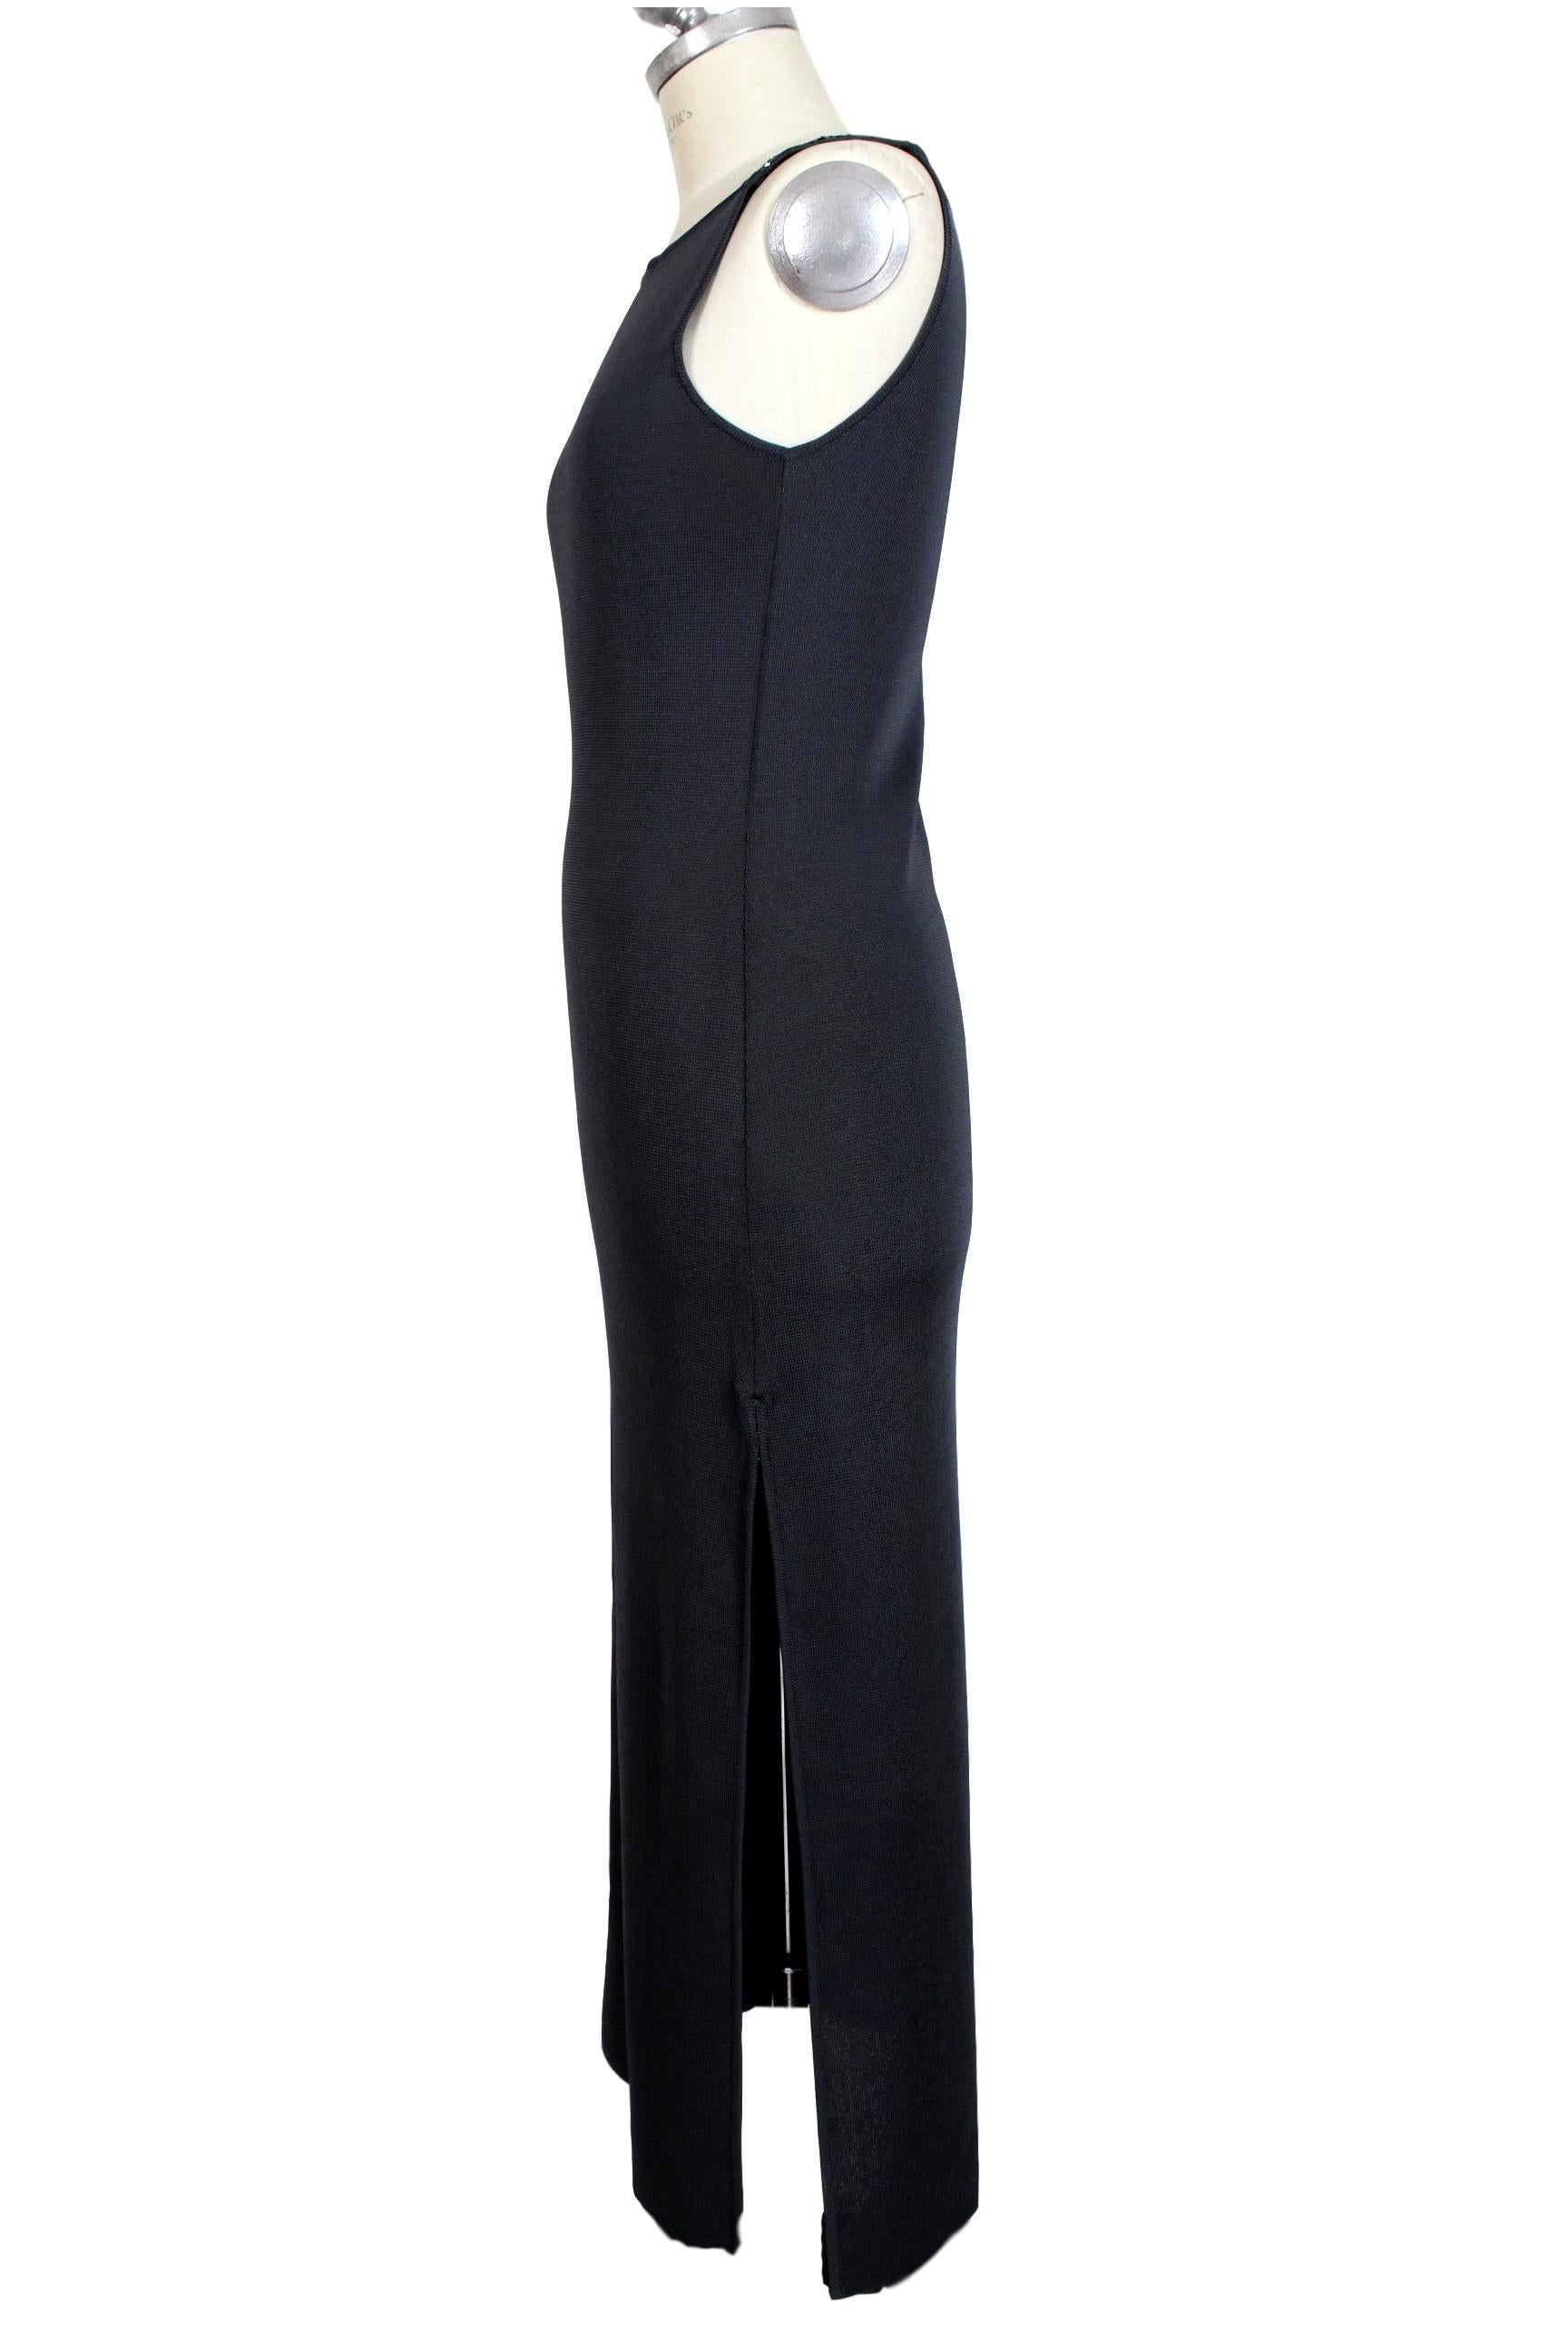 Gianfranco Ferre Viscose Gray Evening Sequins Long Sheath Sleeveless Dress 3